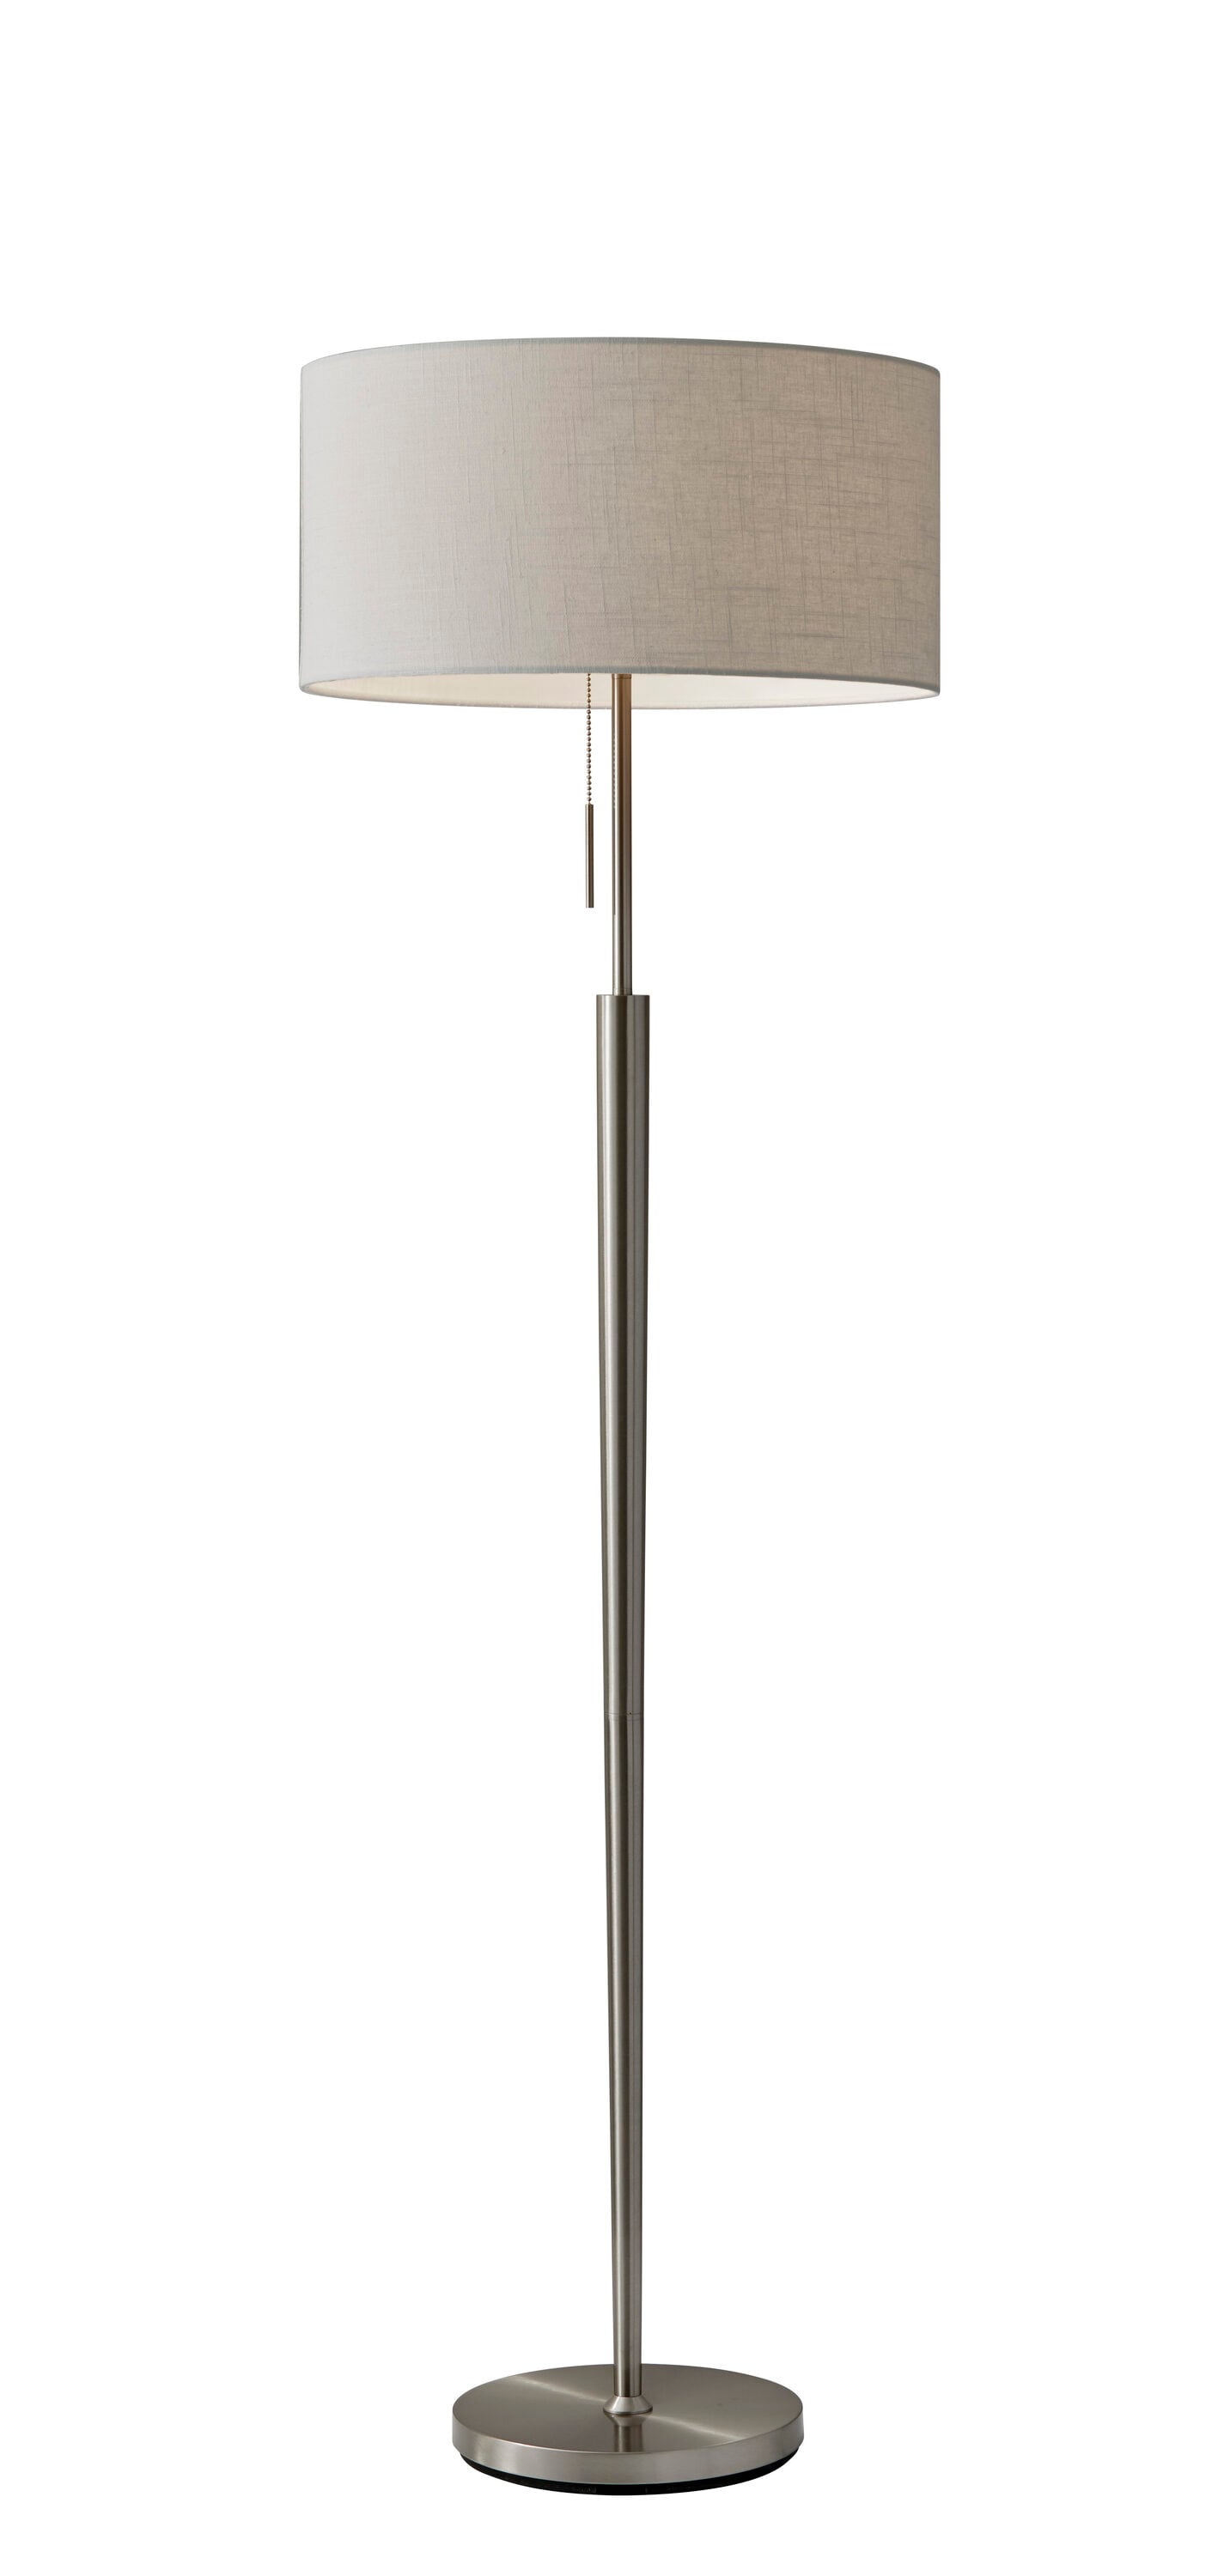 Adesso Hayworth 65-in Brushed Steel Floor Lamp in the Floor Lamps ...